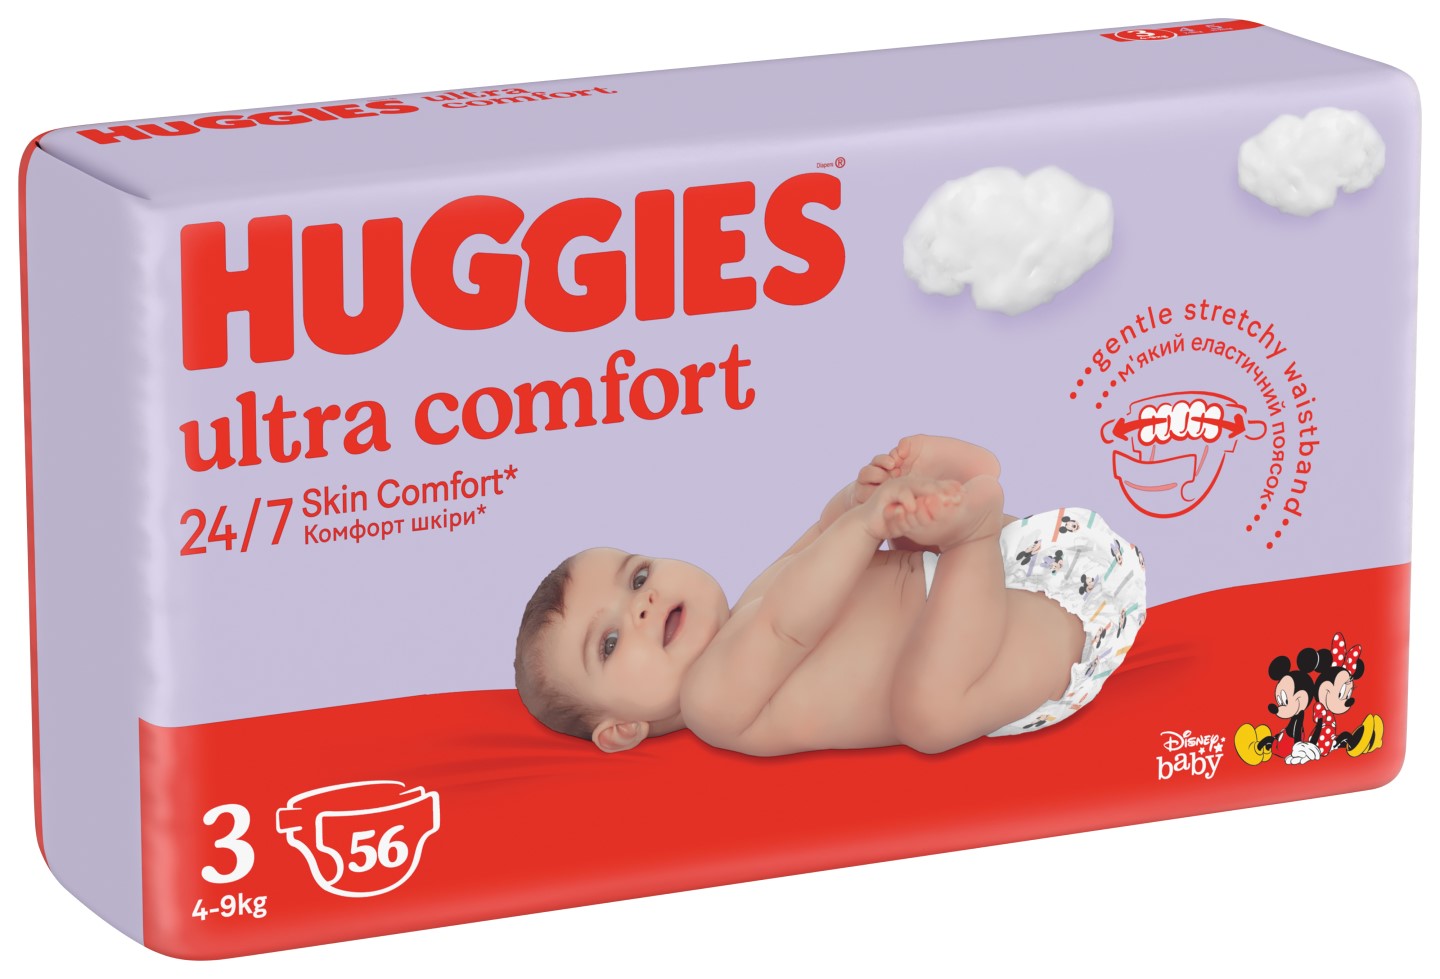 huggies ultra comfort opinie